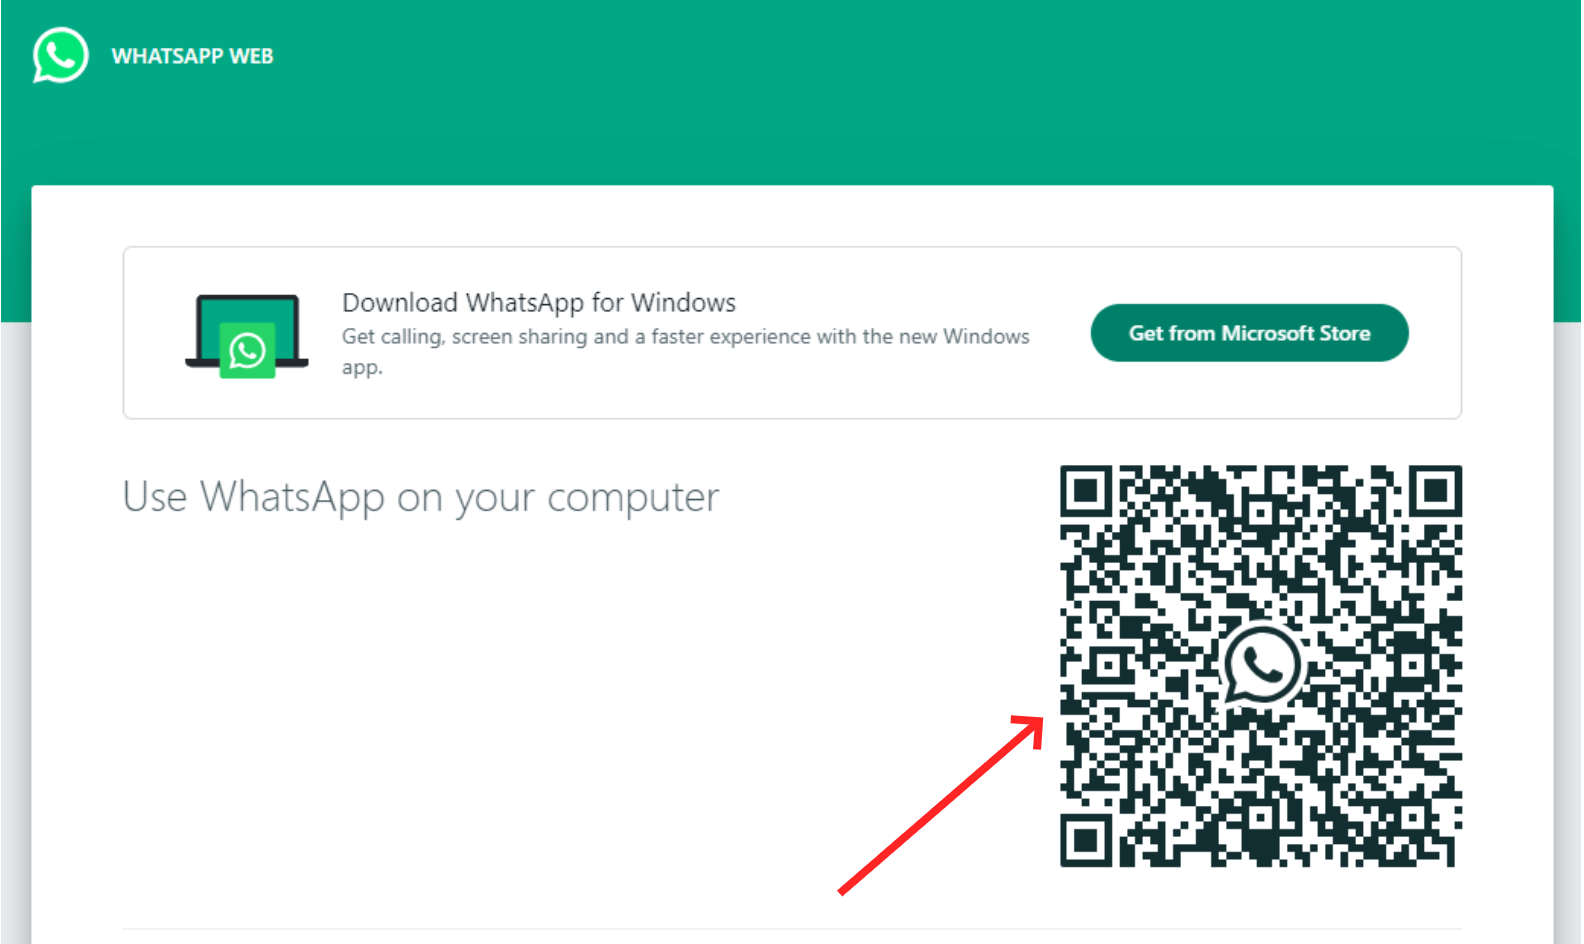 capture QR code to log in whatsapp web